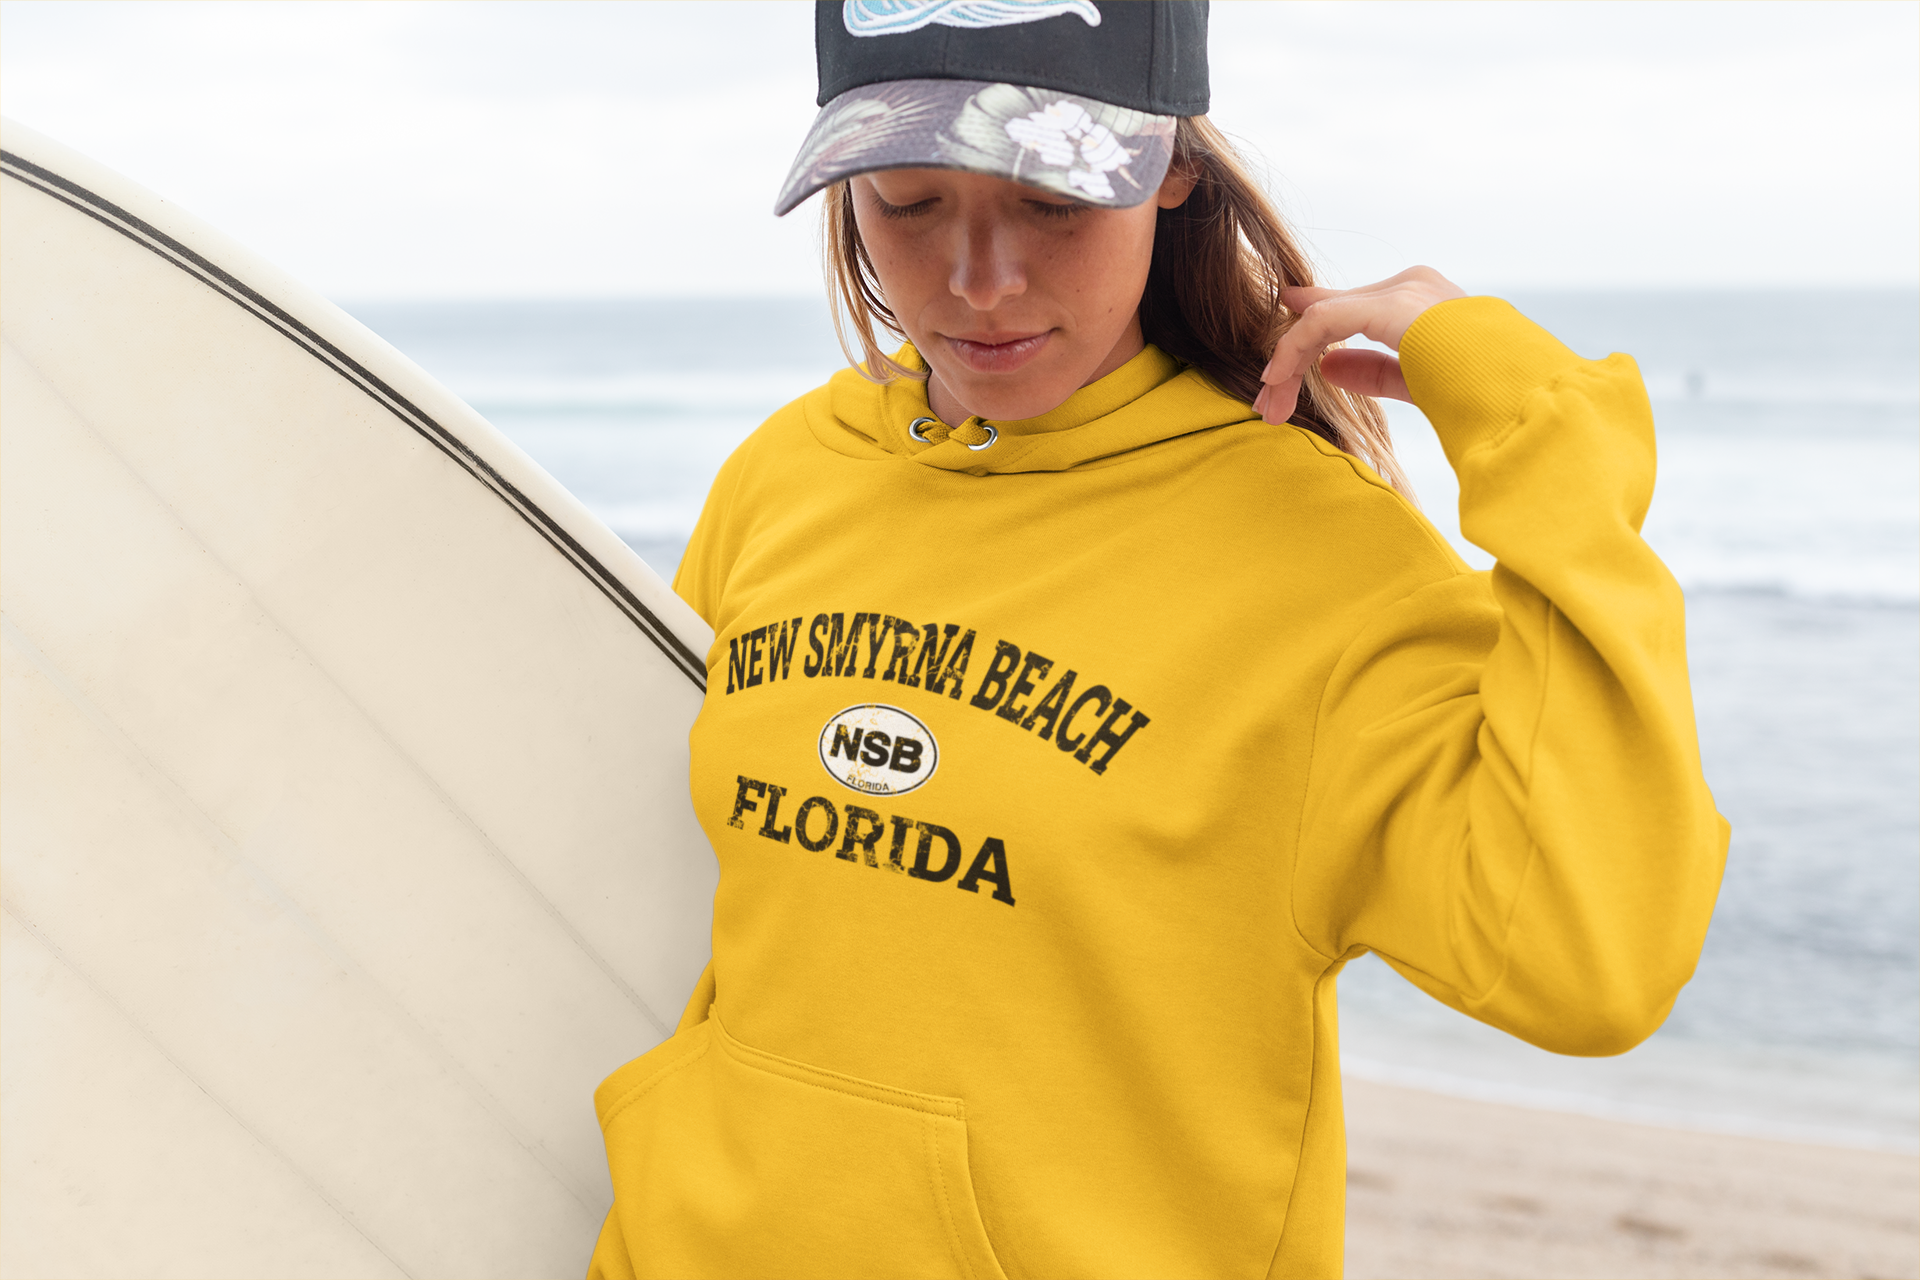 New Smyrna Beach Women's Academic Adult Hoodie - My Destination Location